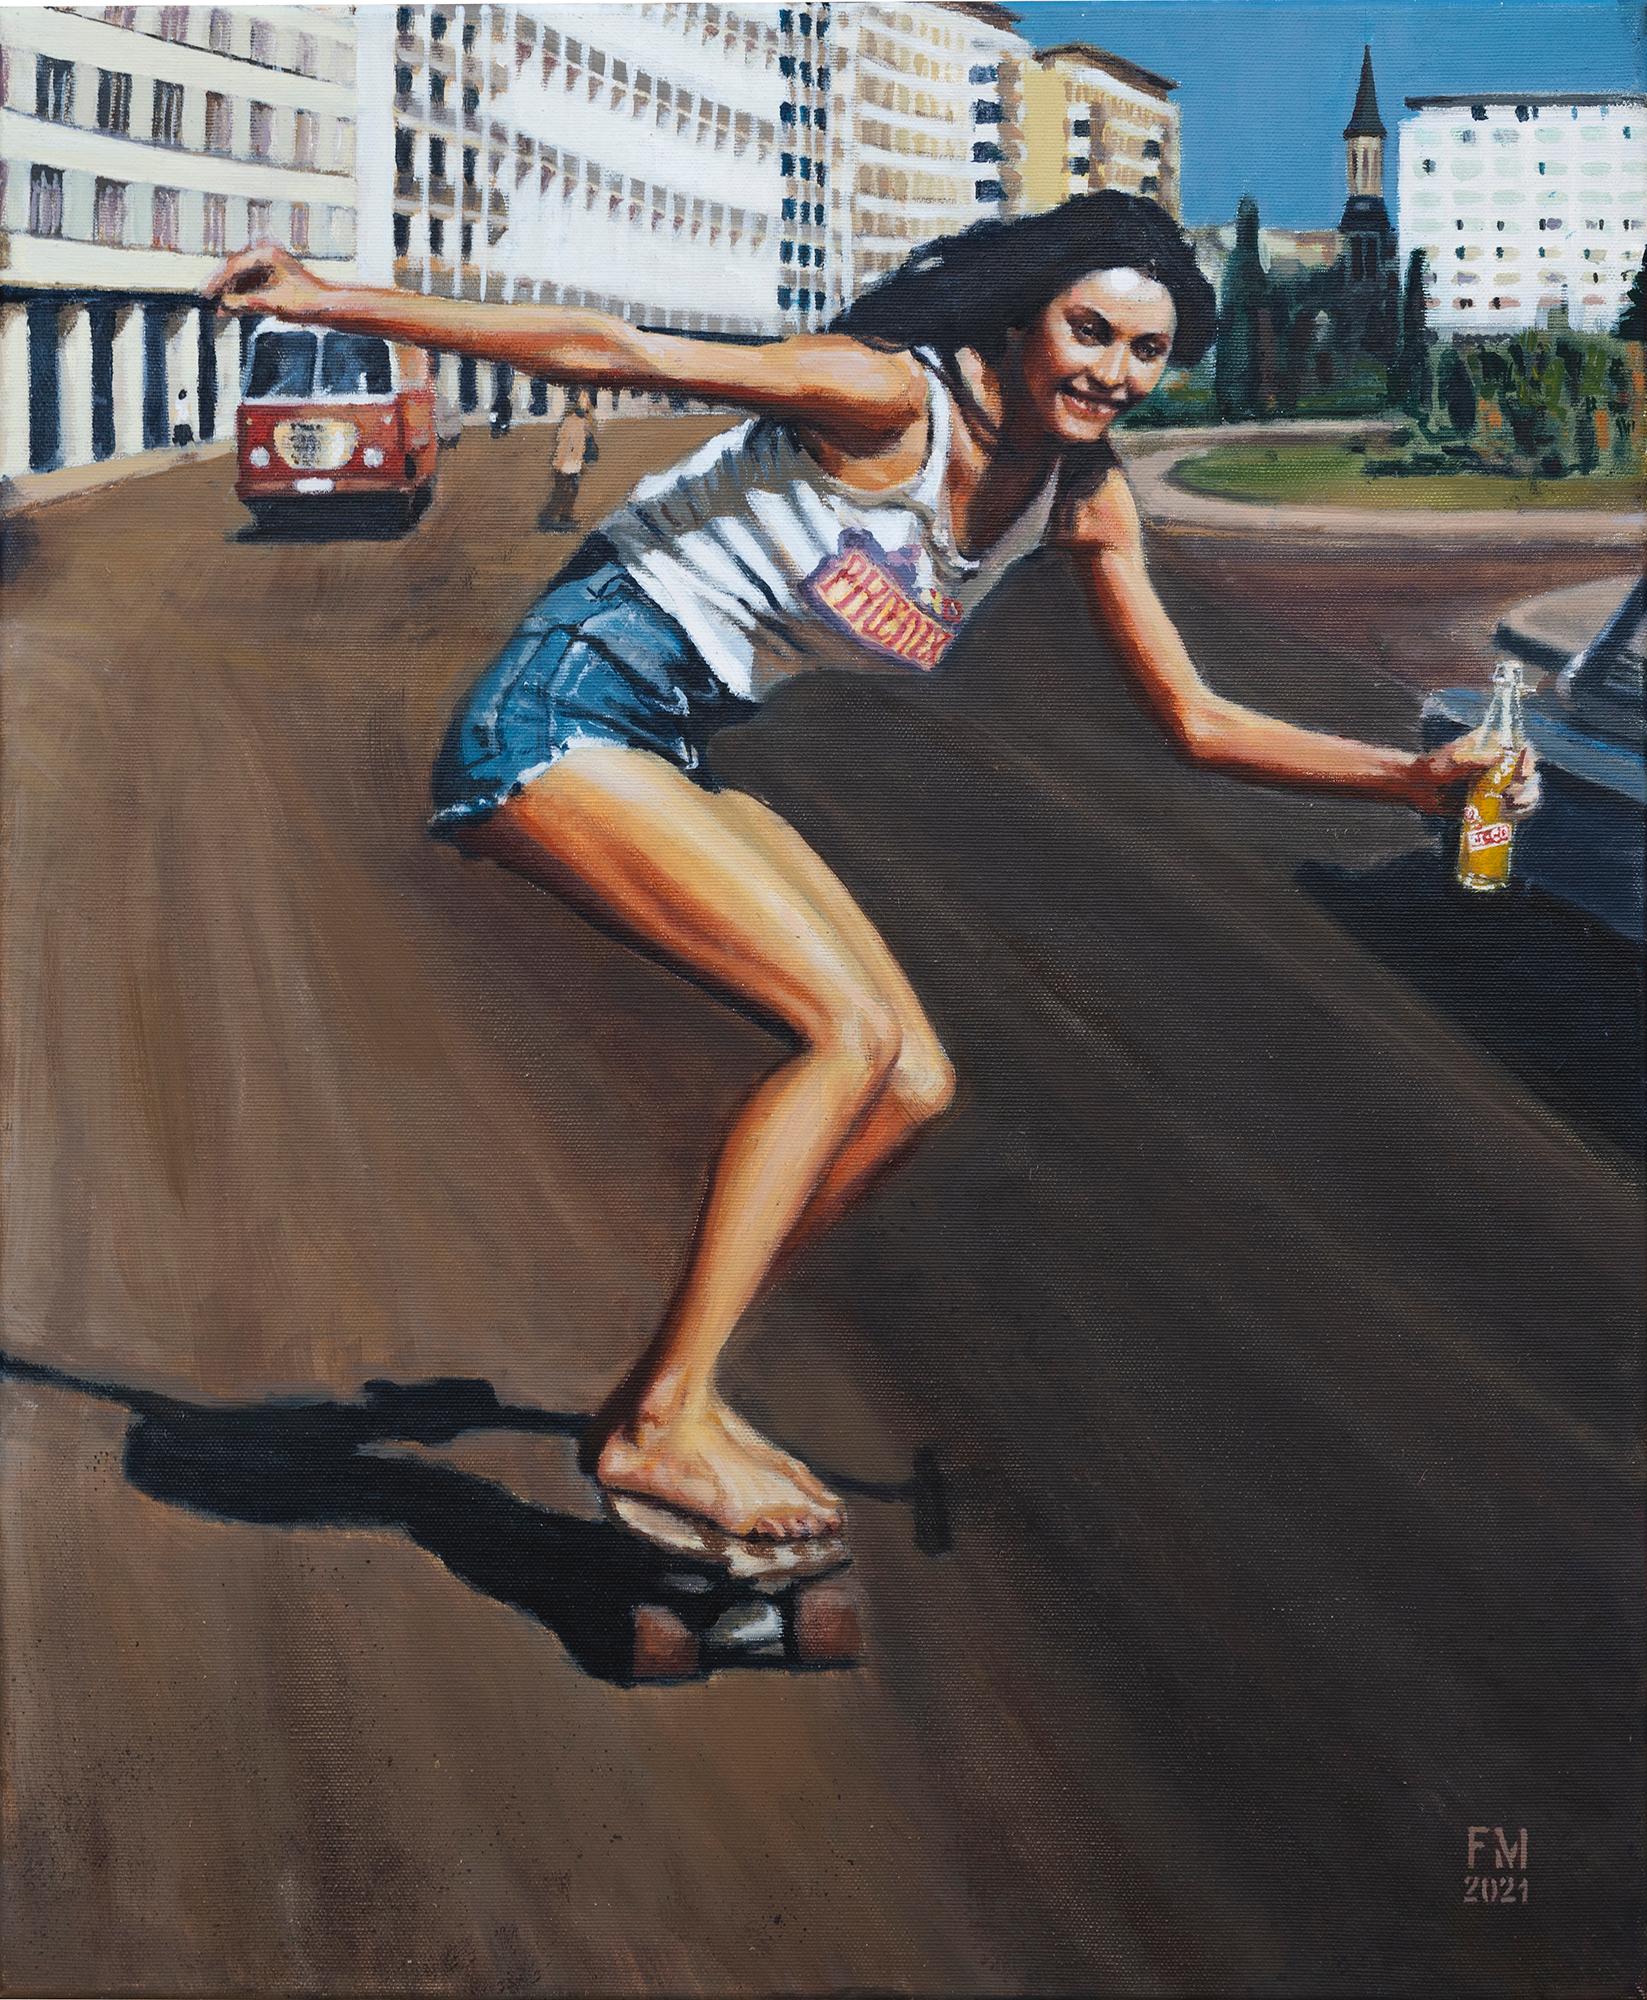 Mihai Florea Figurative Painting - Riding On Change - 21st Century, Cityscape, Woman, Contemporary, Skateboard